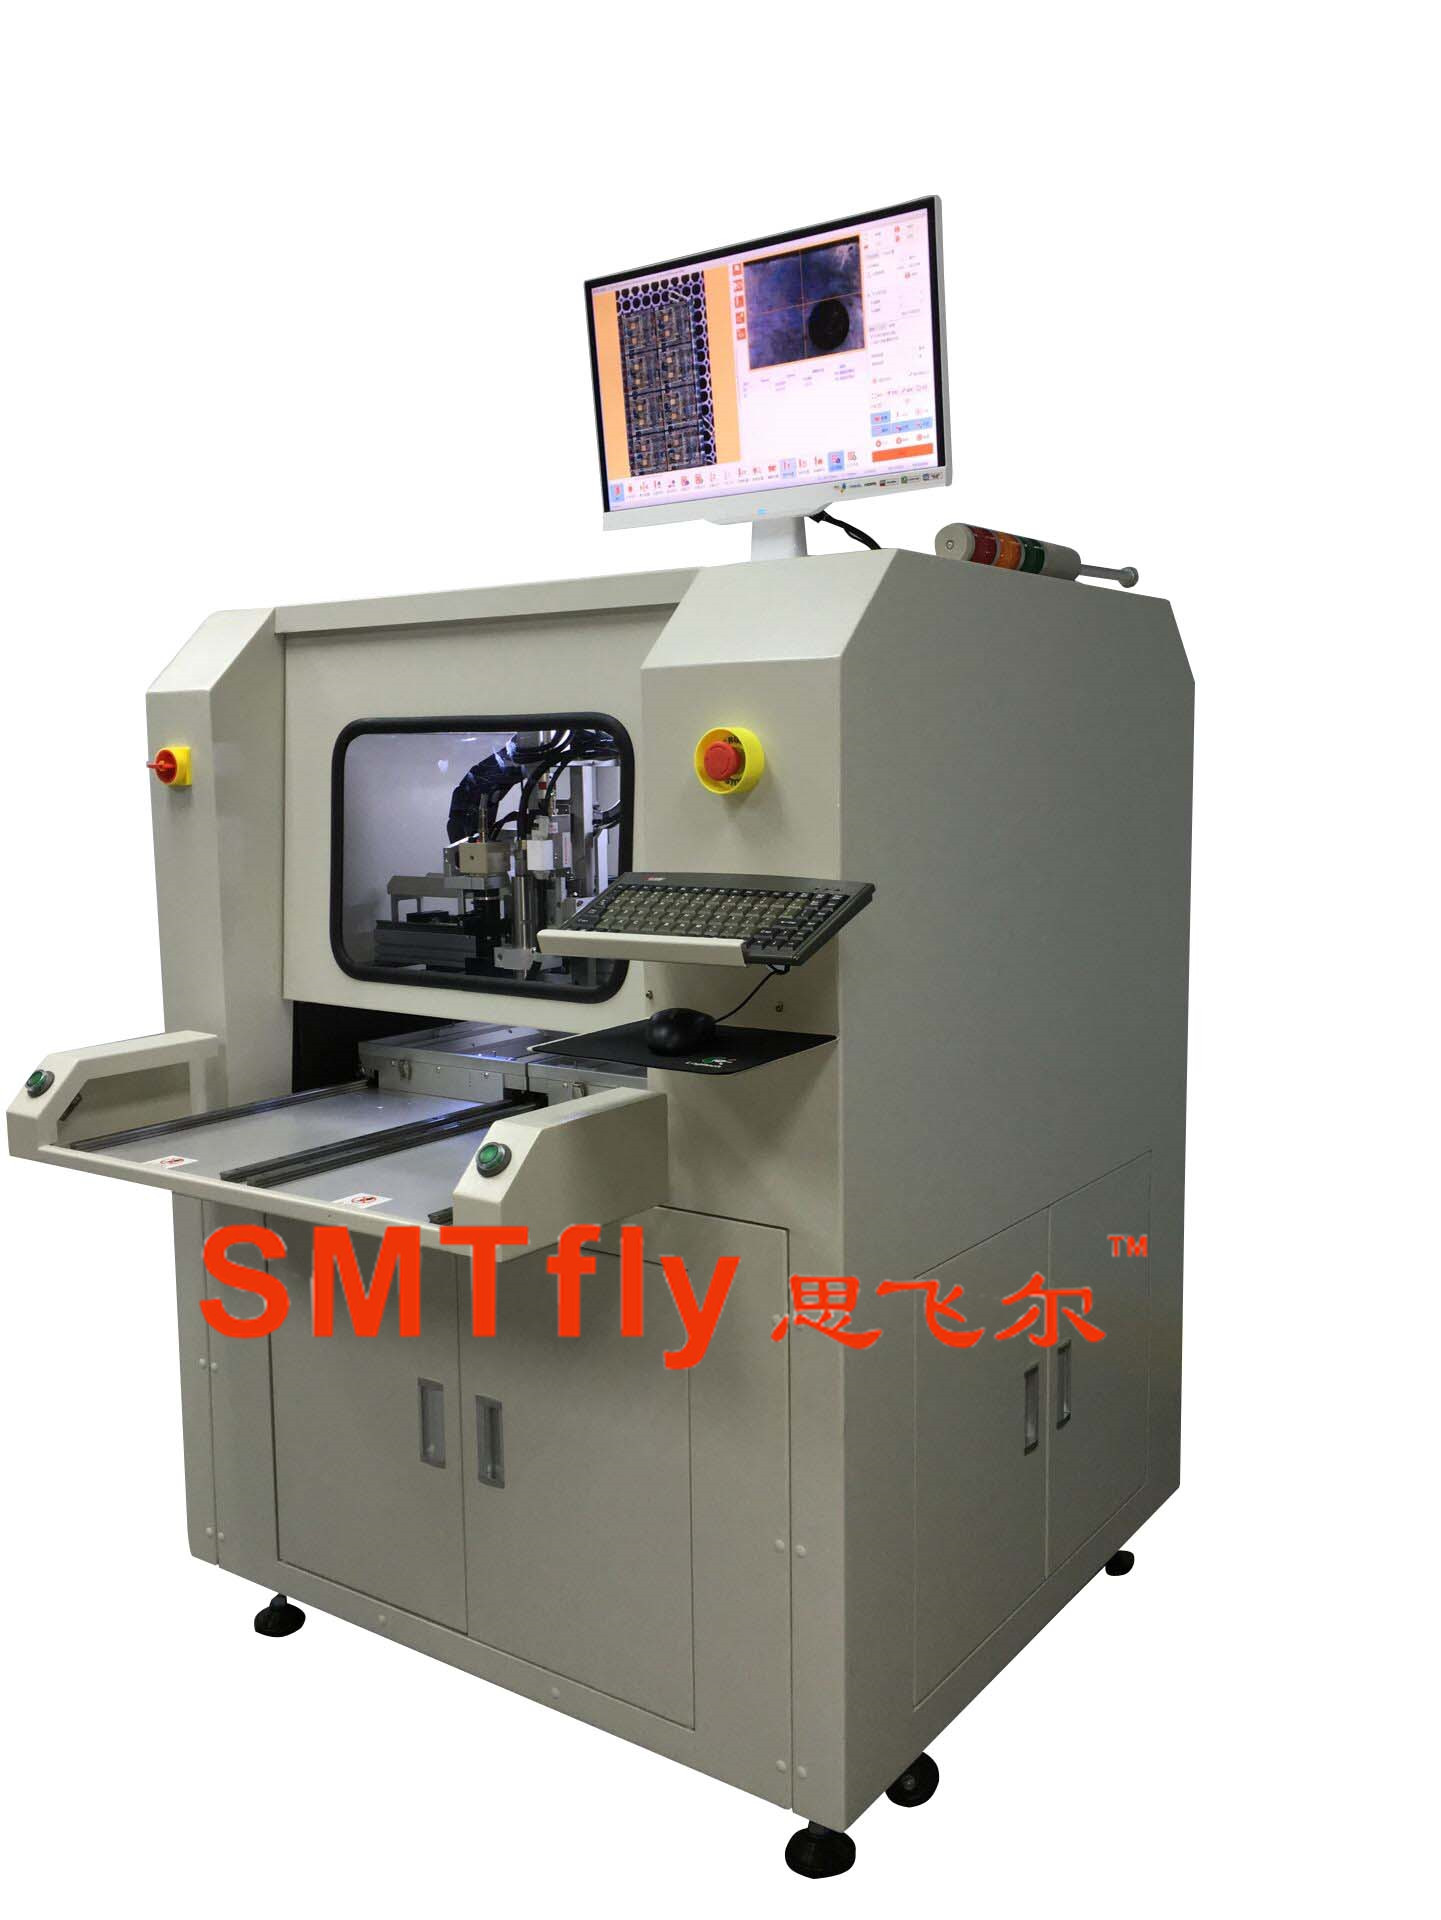 PCB Drill Bits Cutting Machine,SMTfly-F02